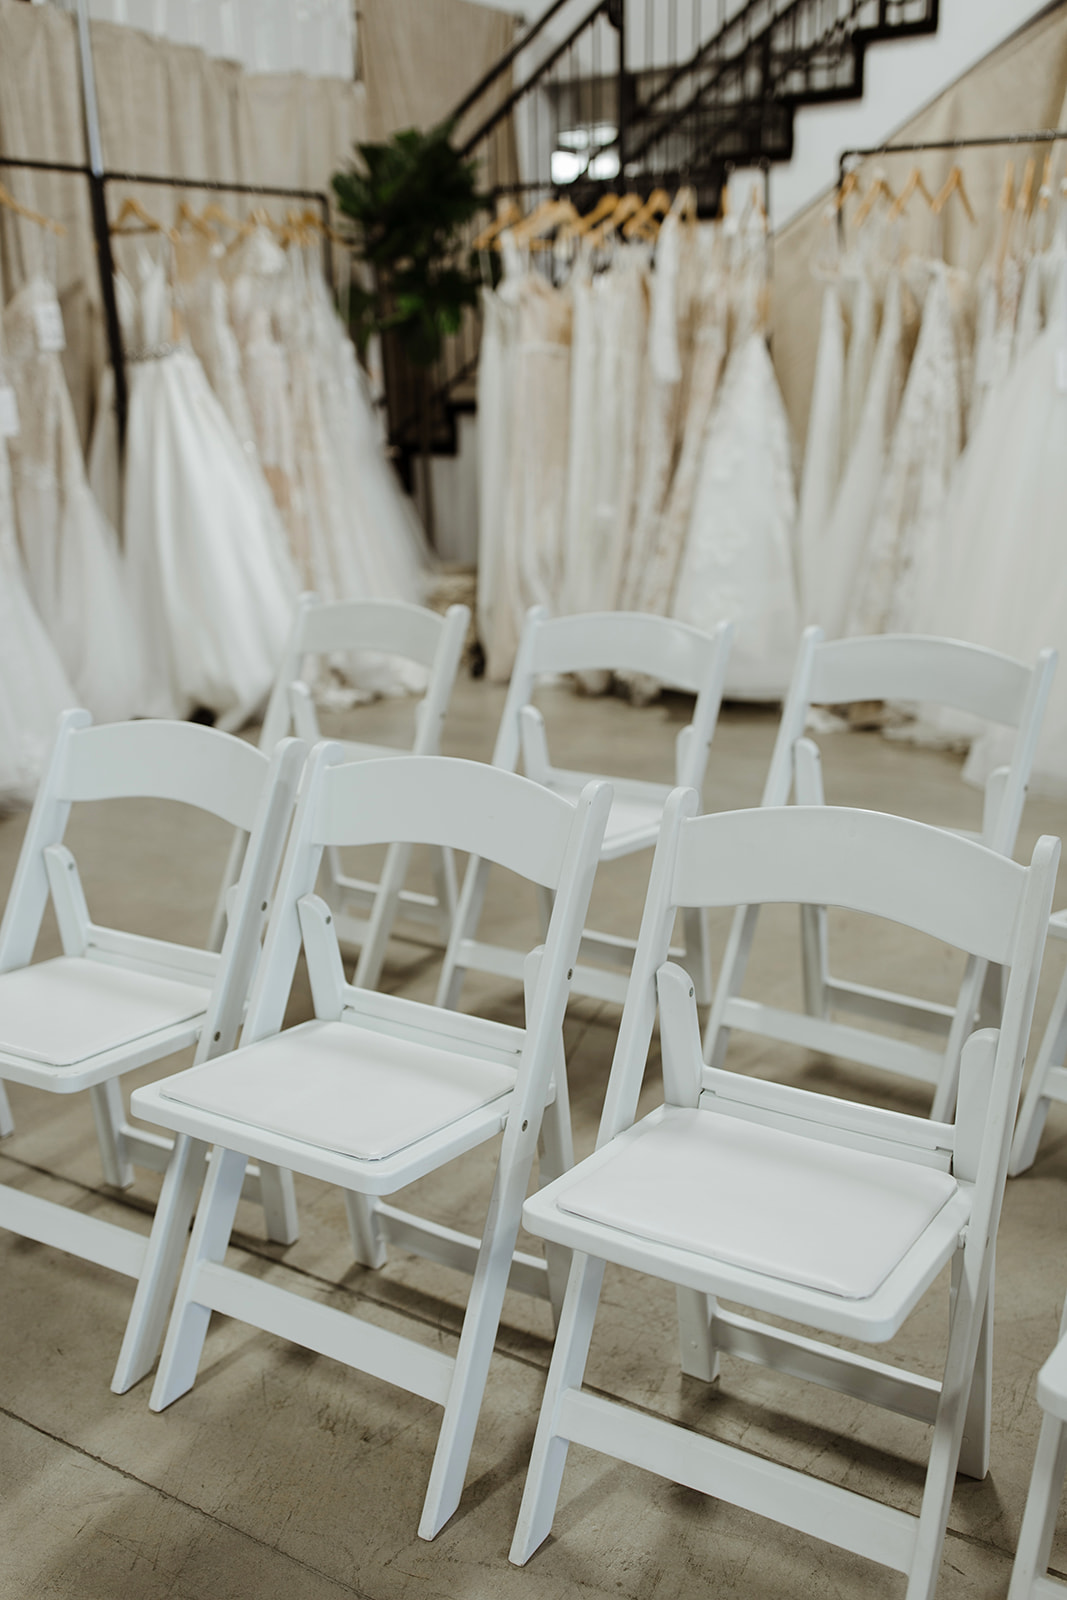 spokane wedding dress fashion show seating dresses white chairs